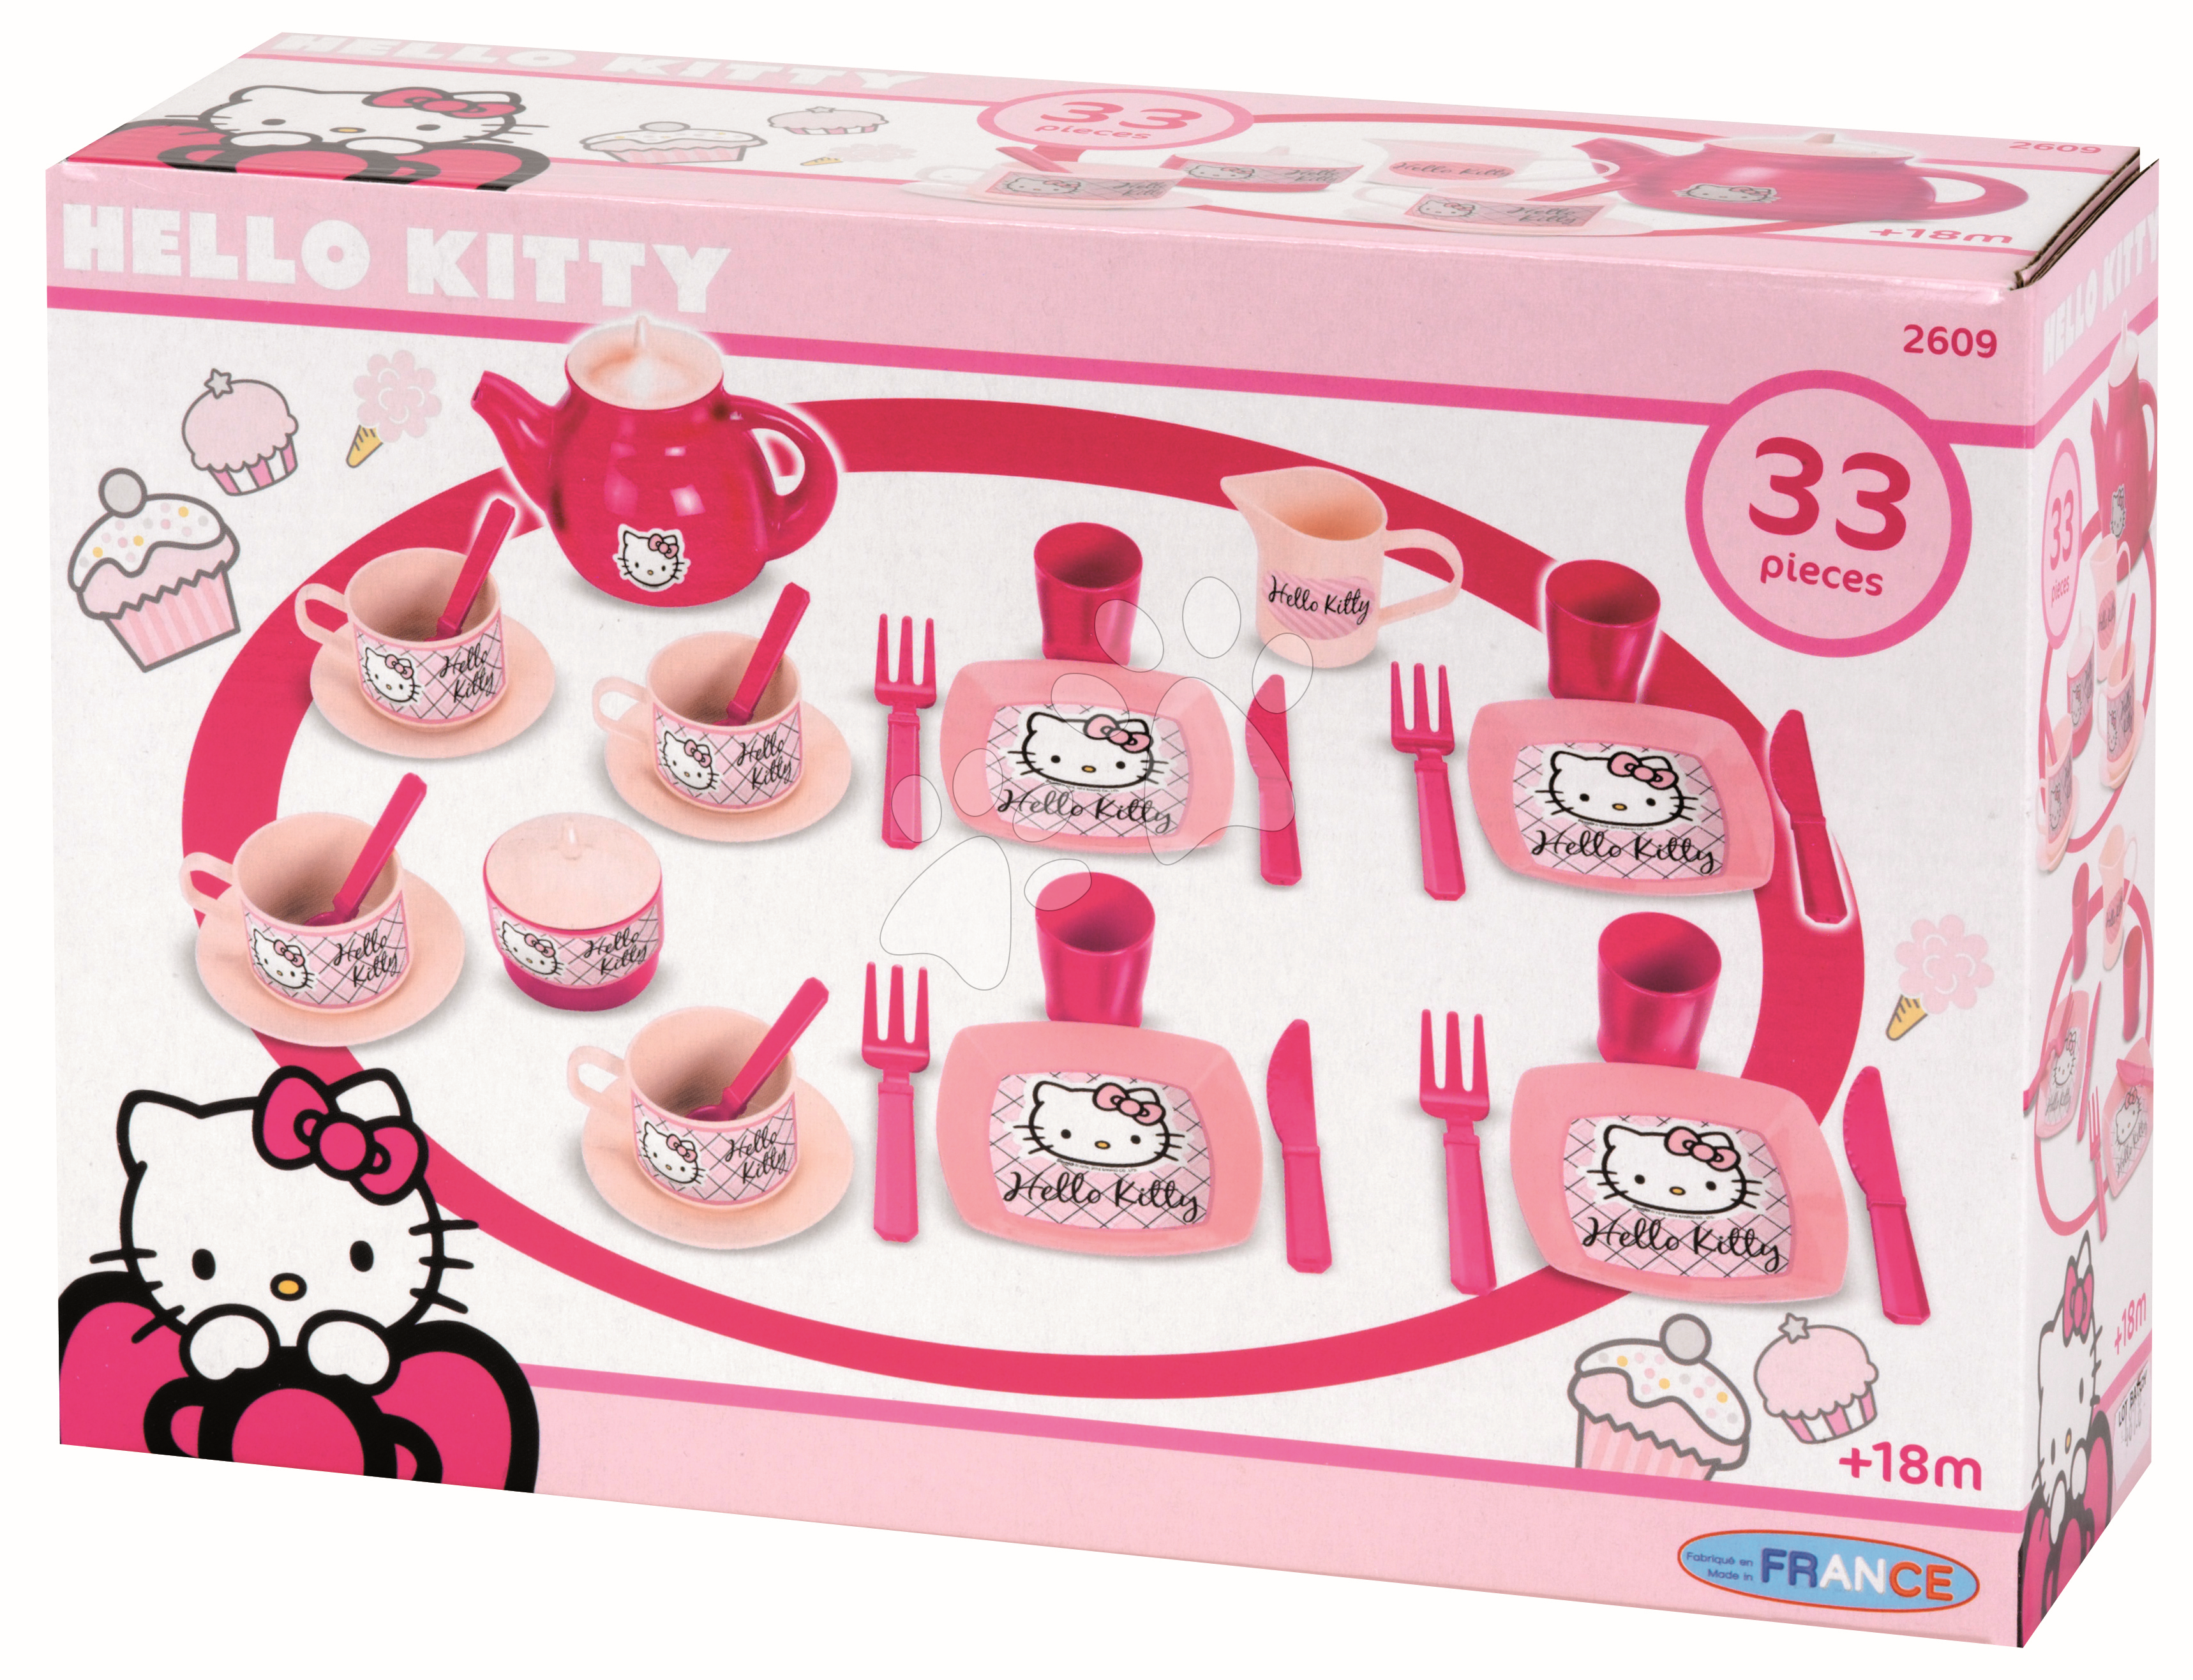 Staré položky - Velký čajový set Hello Kitty Écoiffier růžovo-červený s 33 doplňky